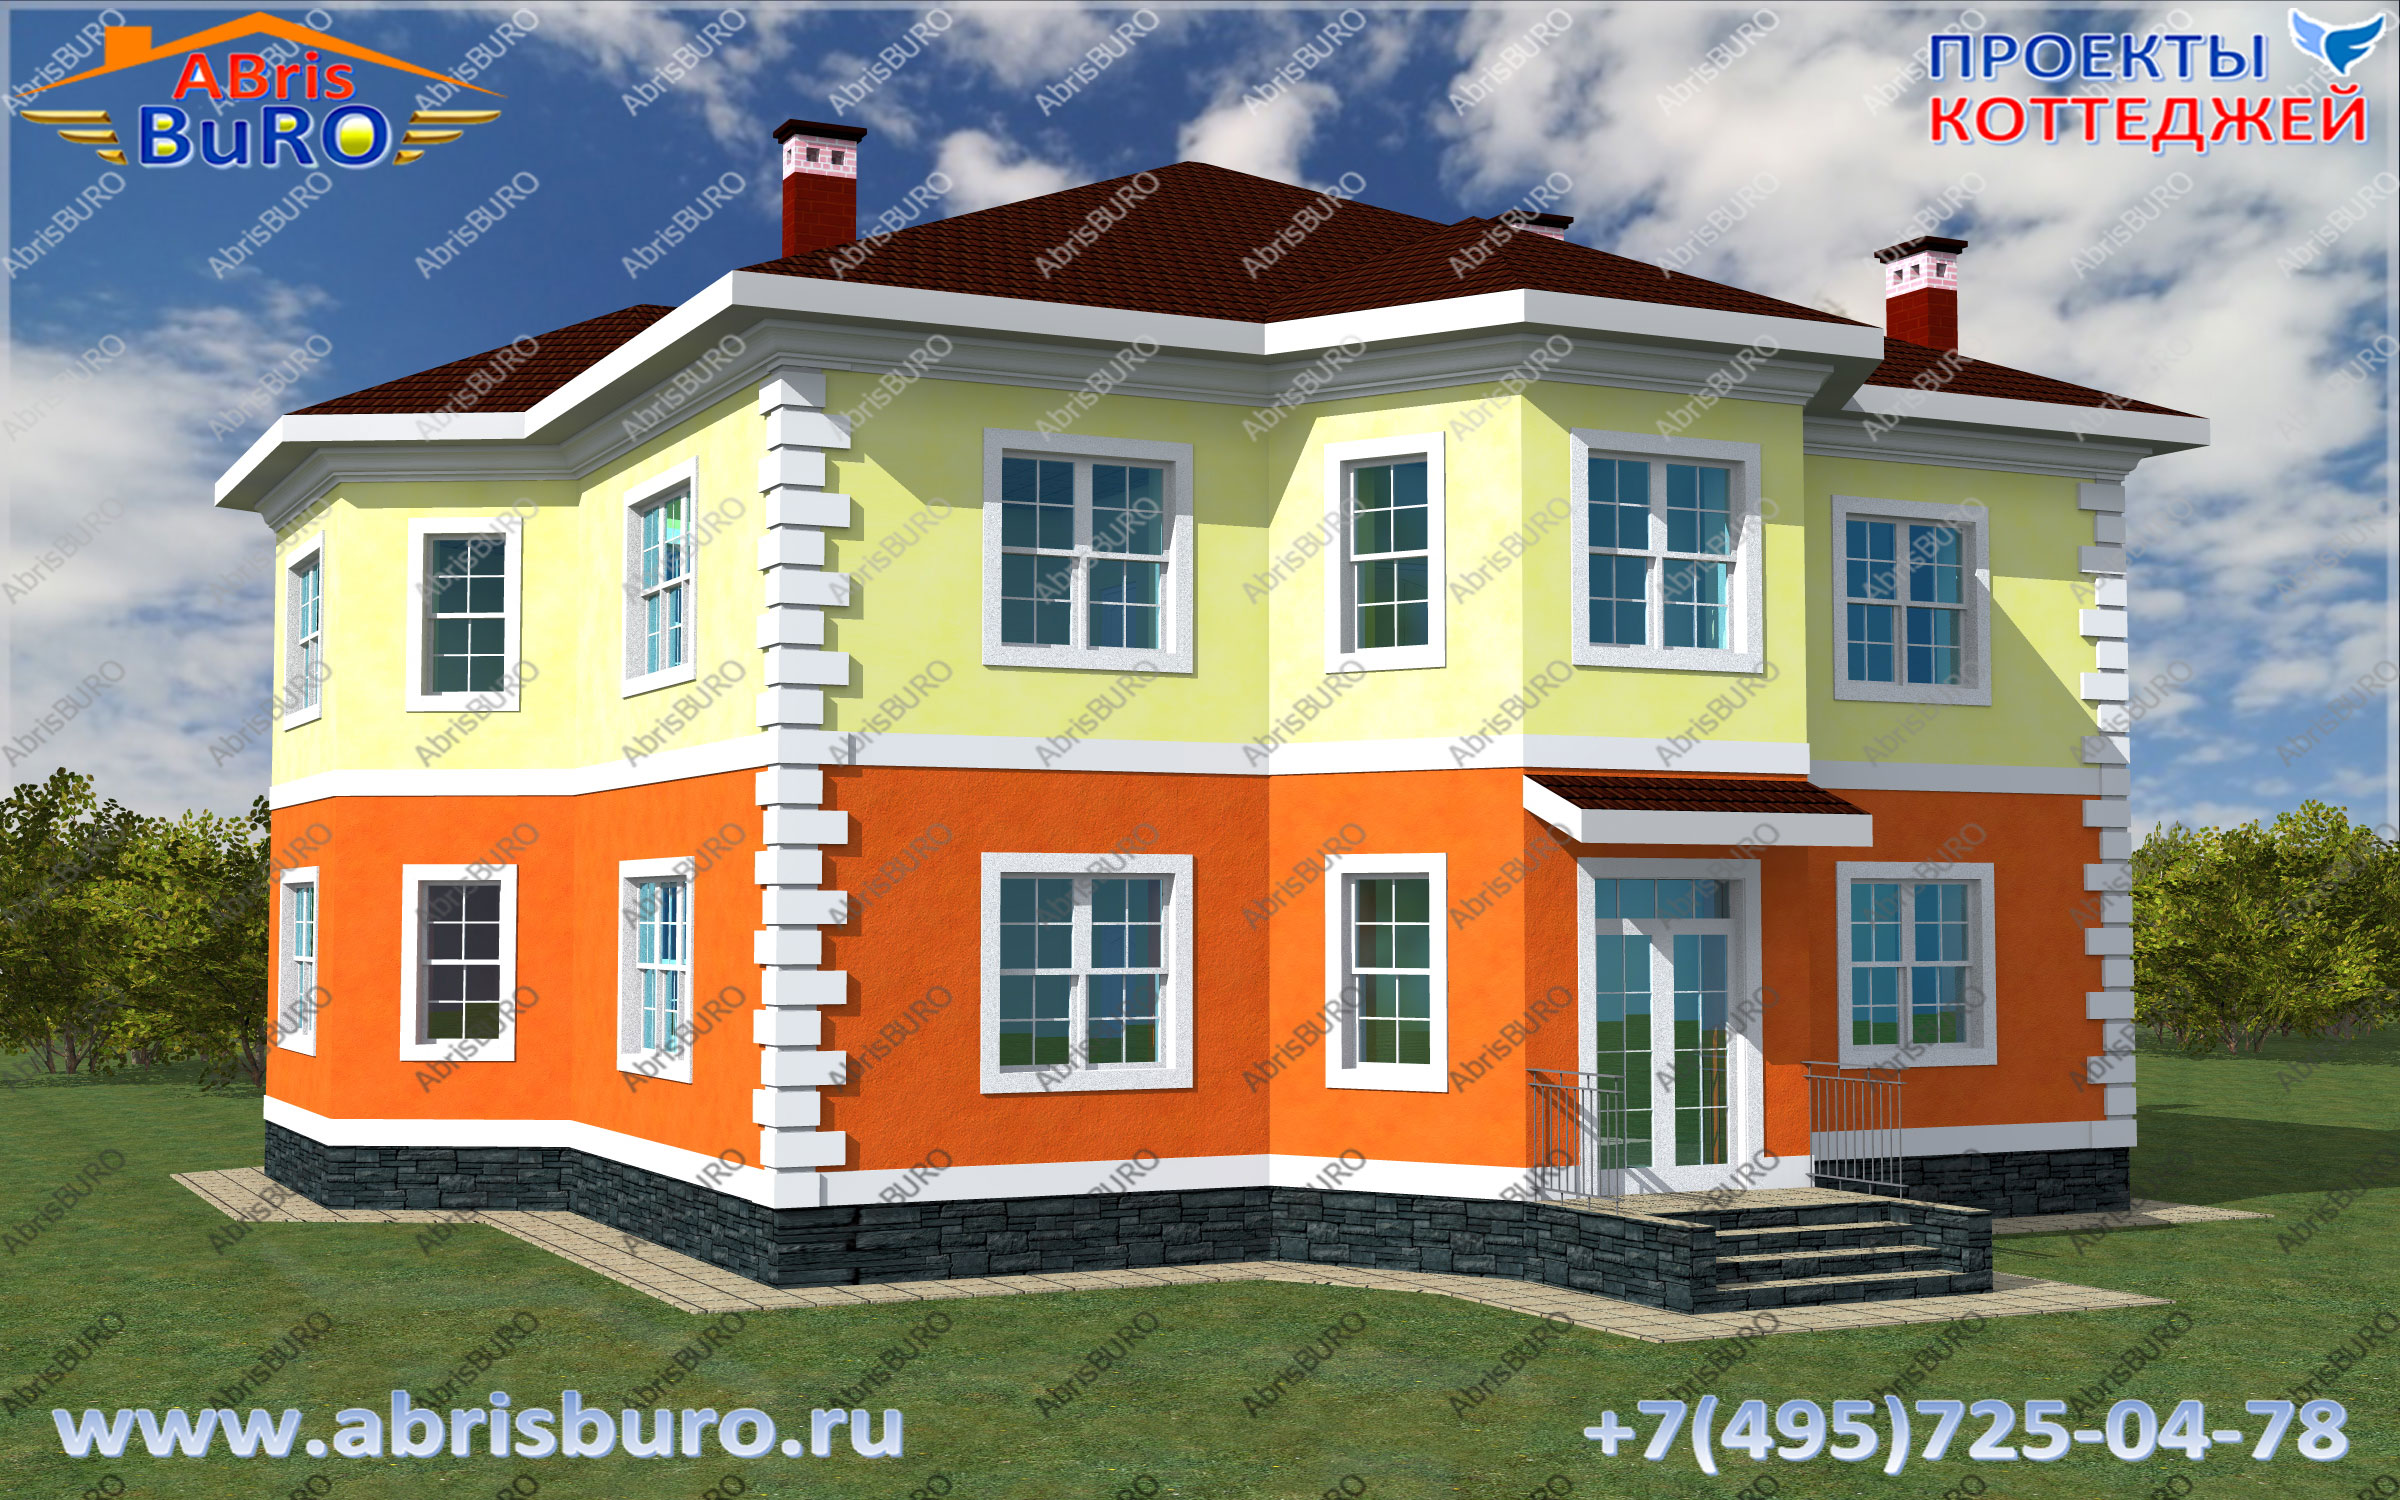 K2576-286 Проект красивого  дома с 2-мя эркерами www.abrisburo.ru